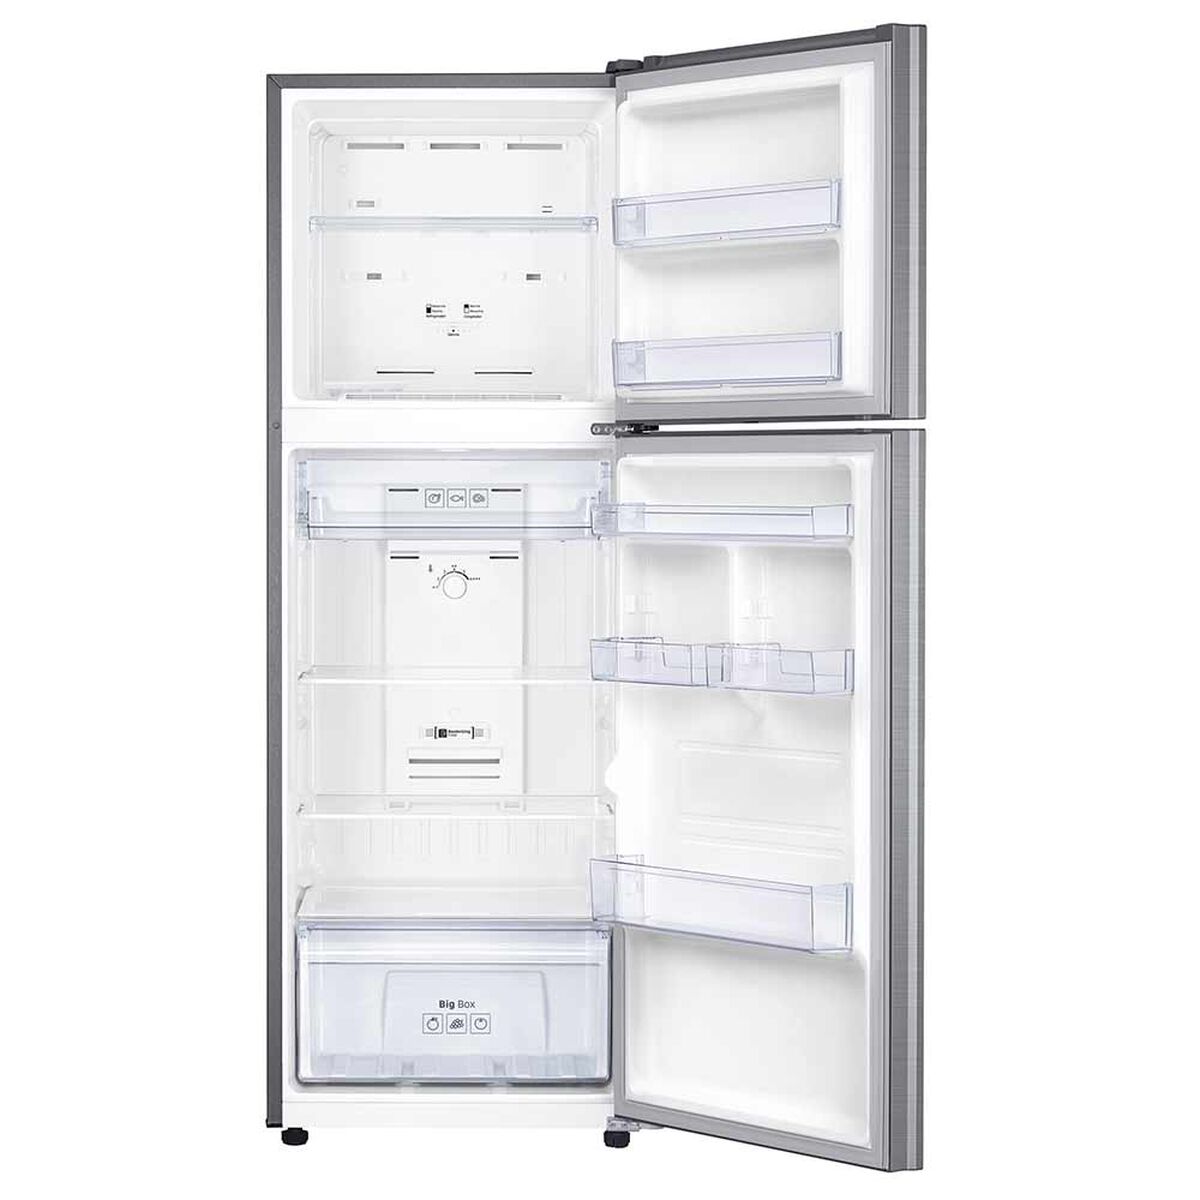 Refrigerador No Frost Samsung RT32K500JS8/ZS 321 lt